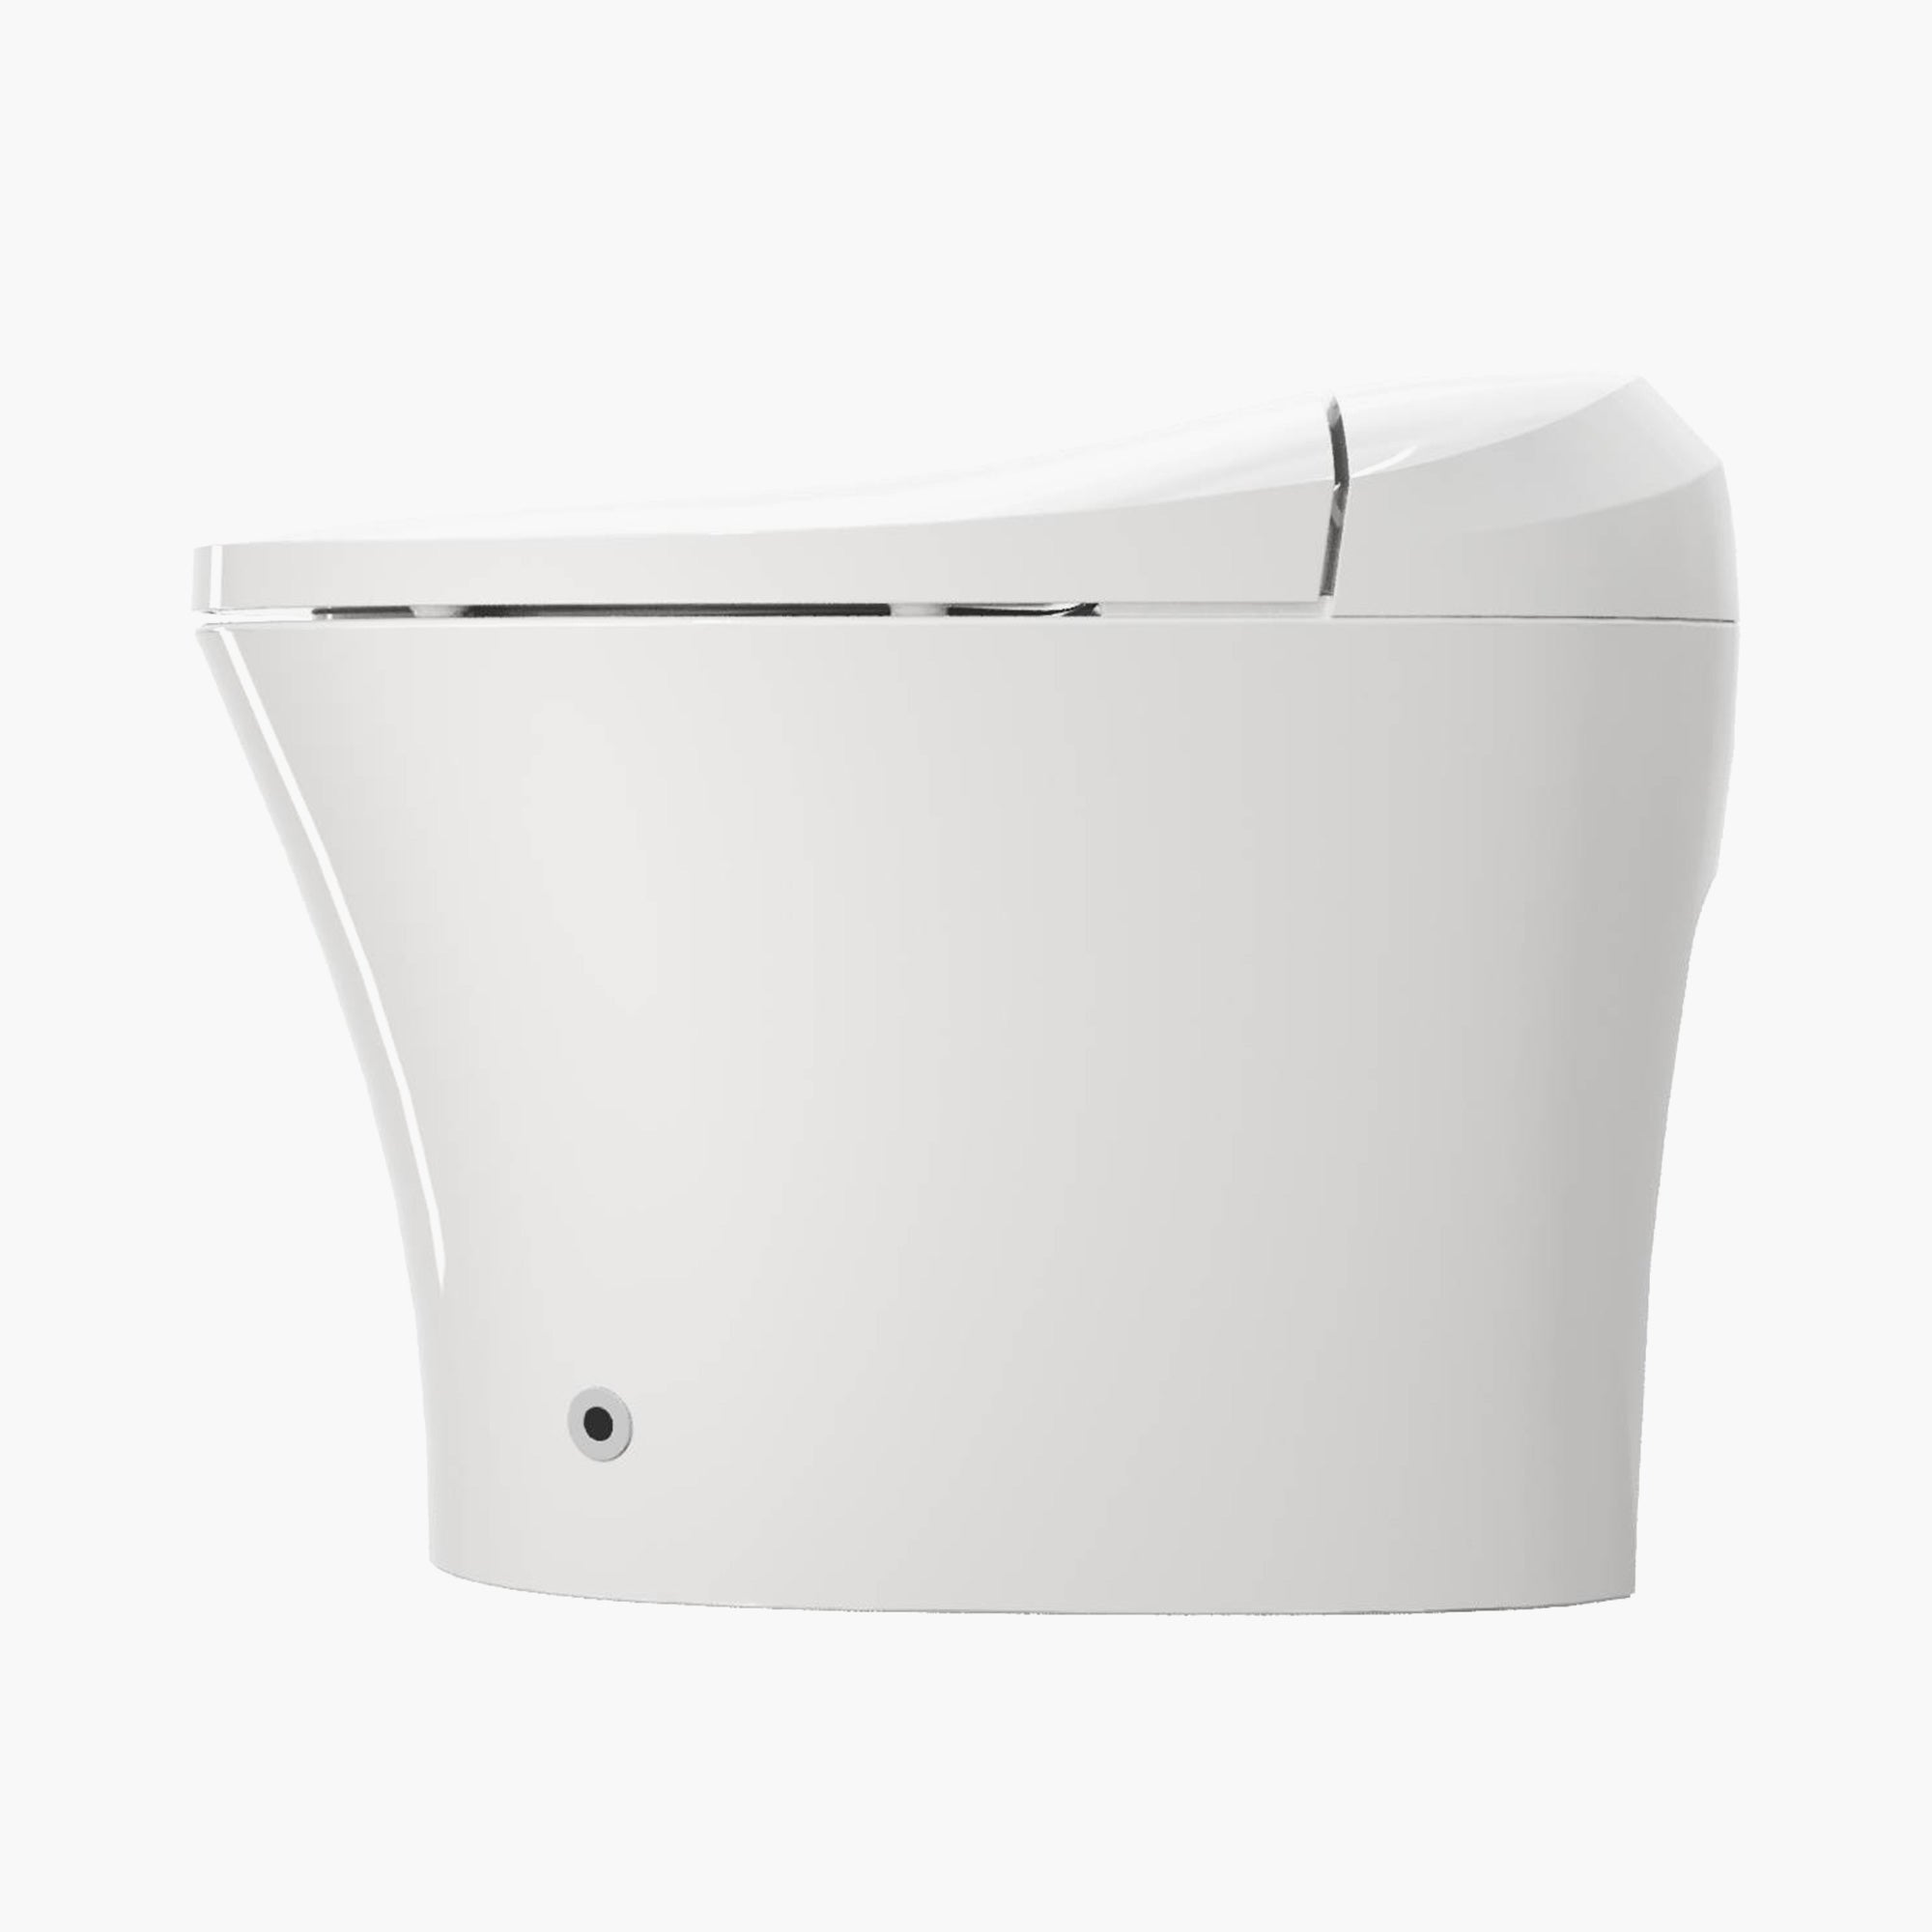 HOROW Best Bidet Toilet Automatic Flush Toilet Model T20